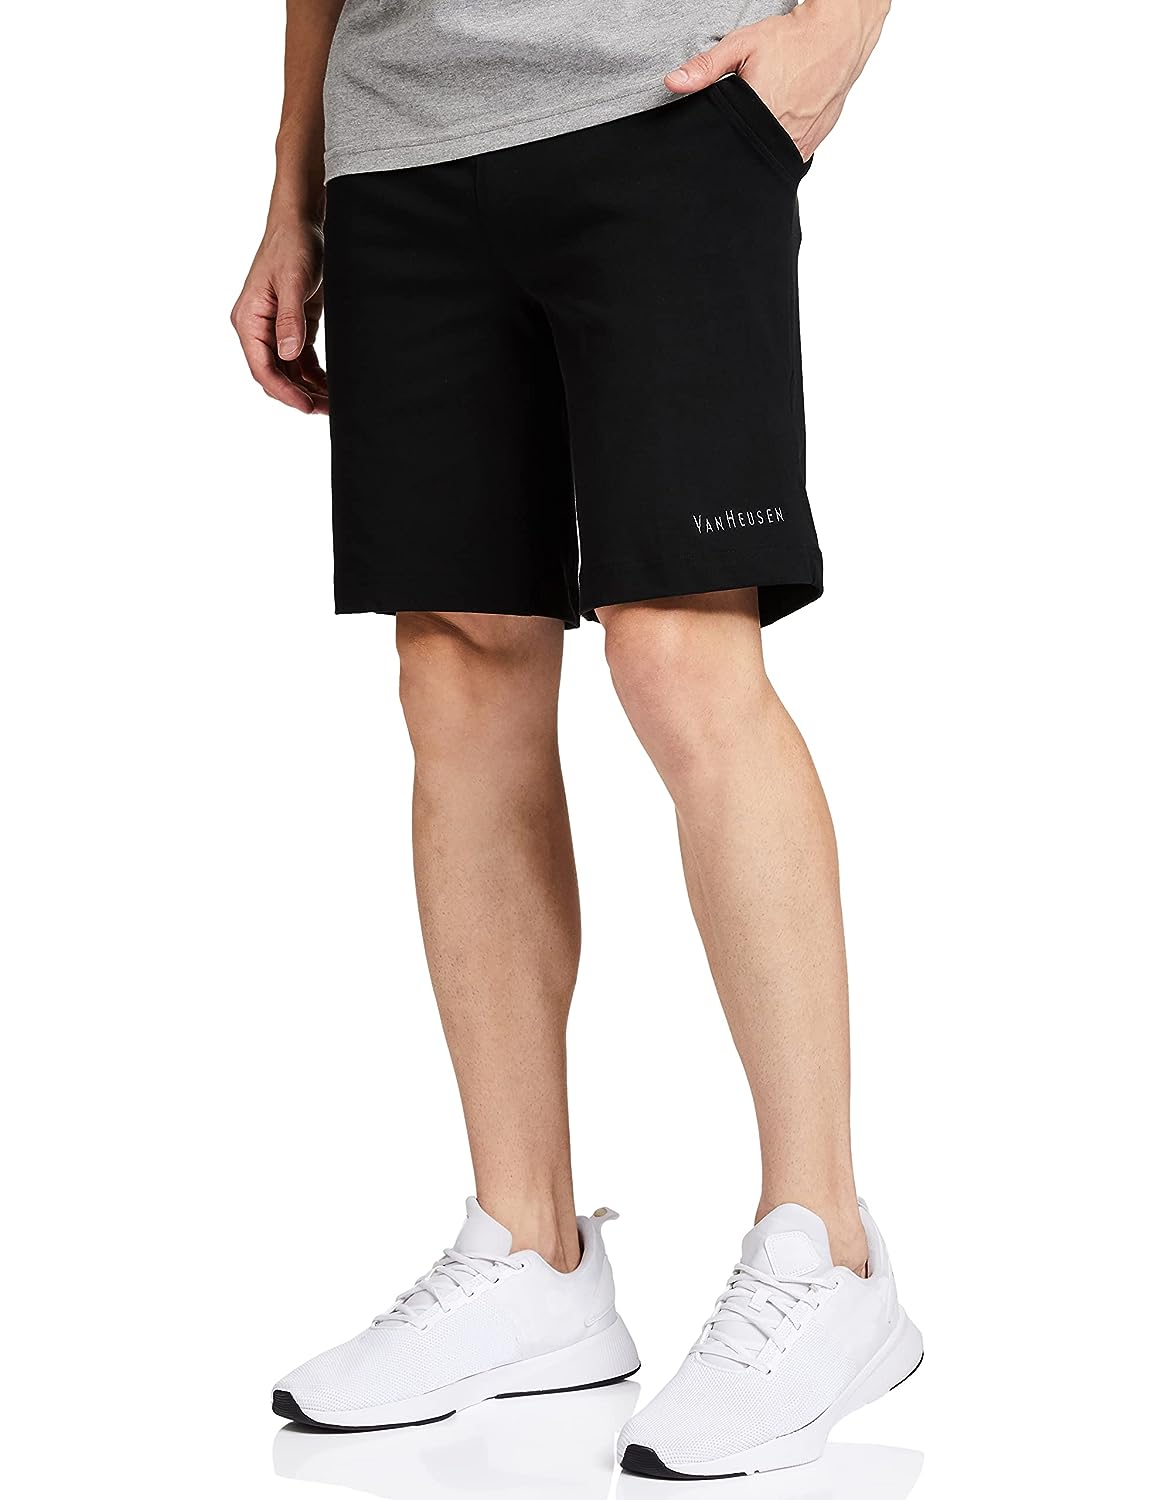 Van Heusen Athleisure Men Knit Shorts - Cotton Rich - Smart Tech, Easy Stain Release, Anti Stat, Ultra Soft, Quick Dry